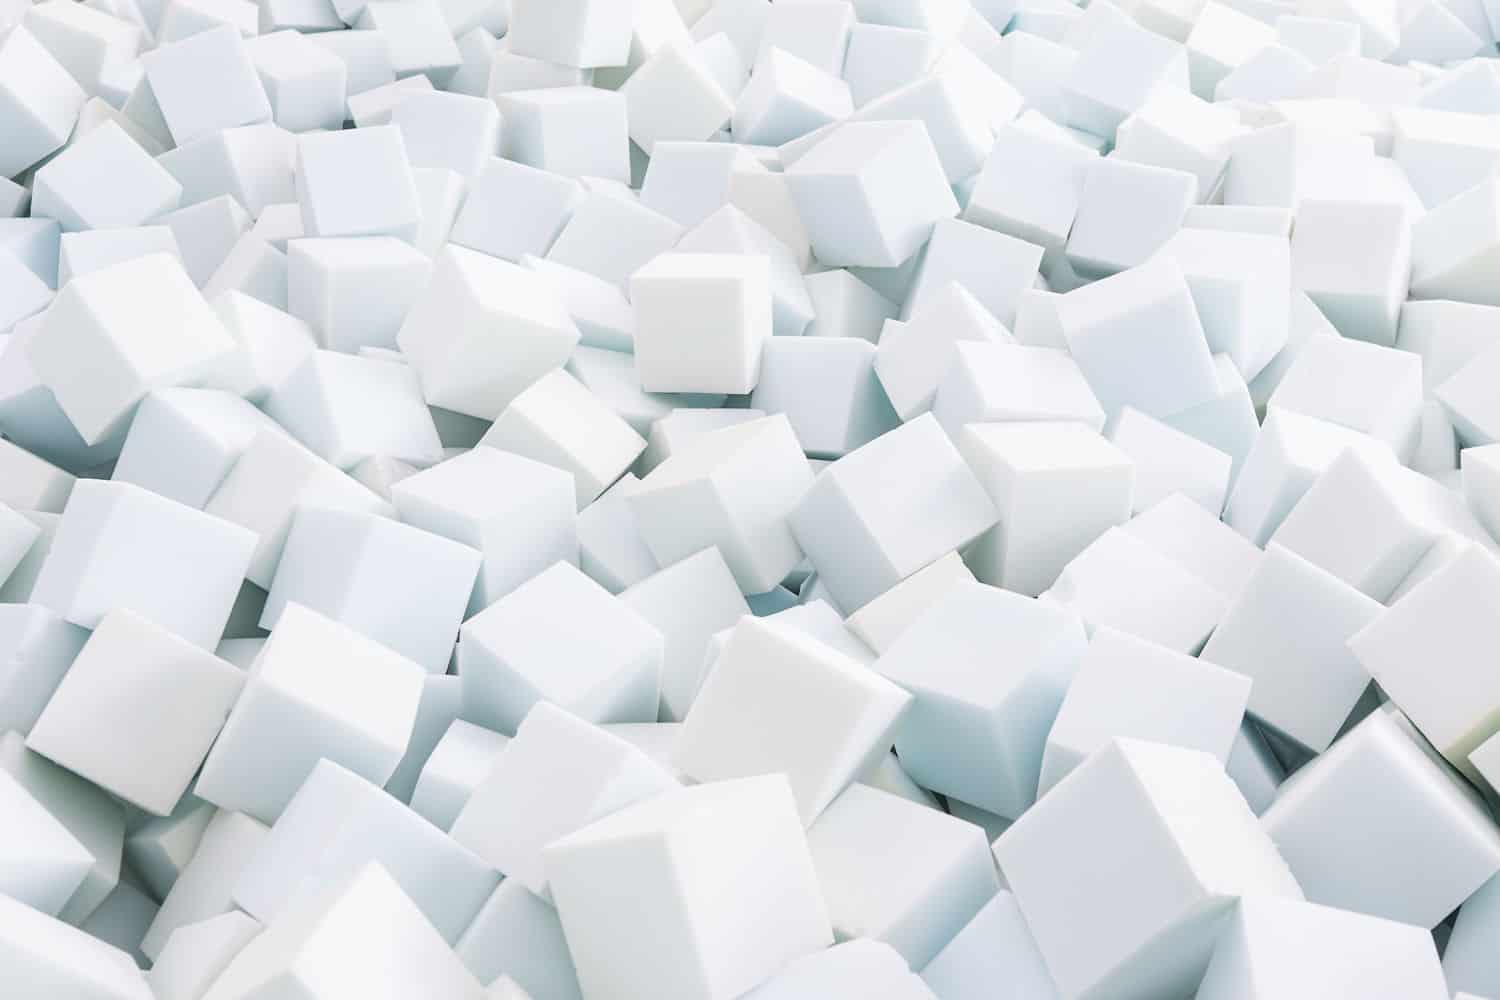 Foam Pit Cubes for Gymnastics & Sports 